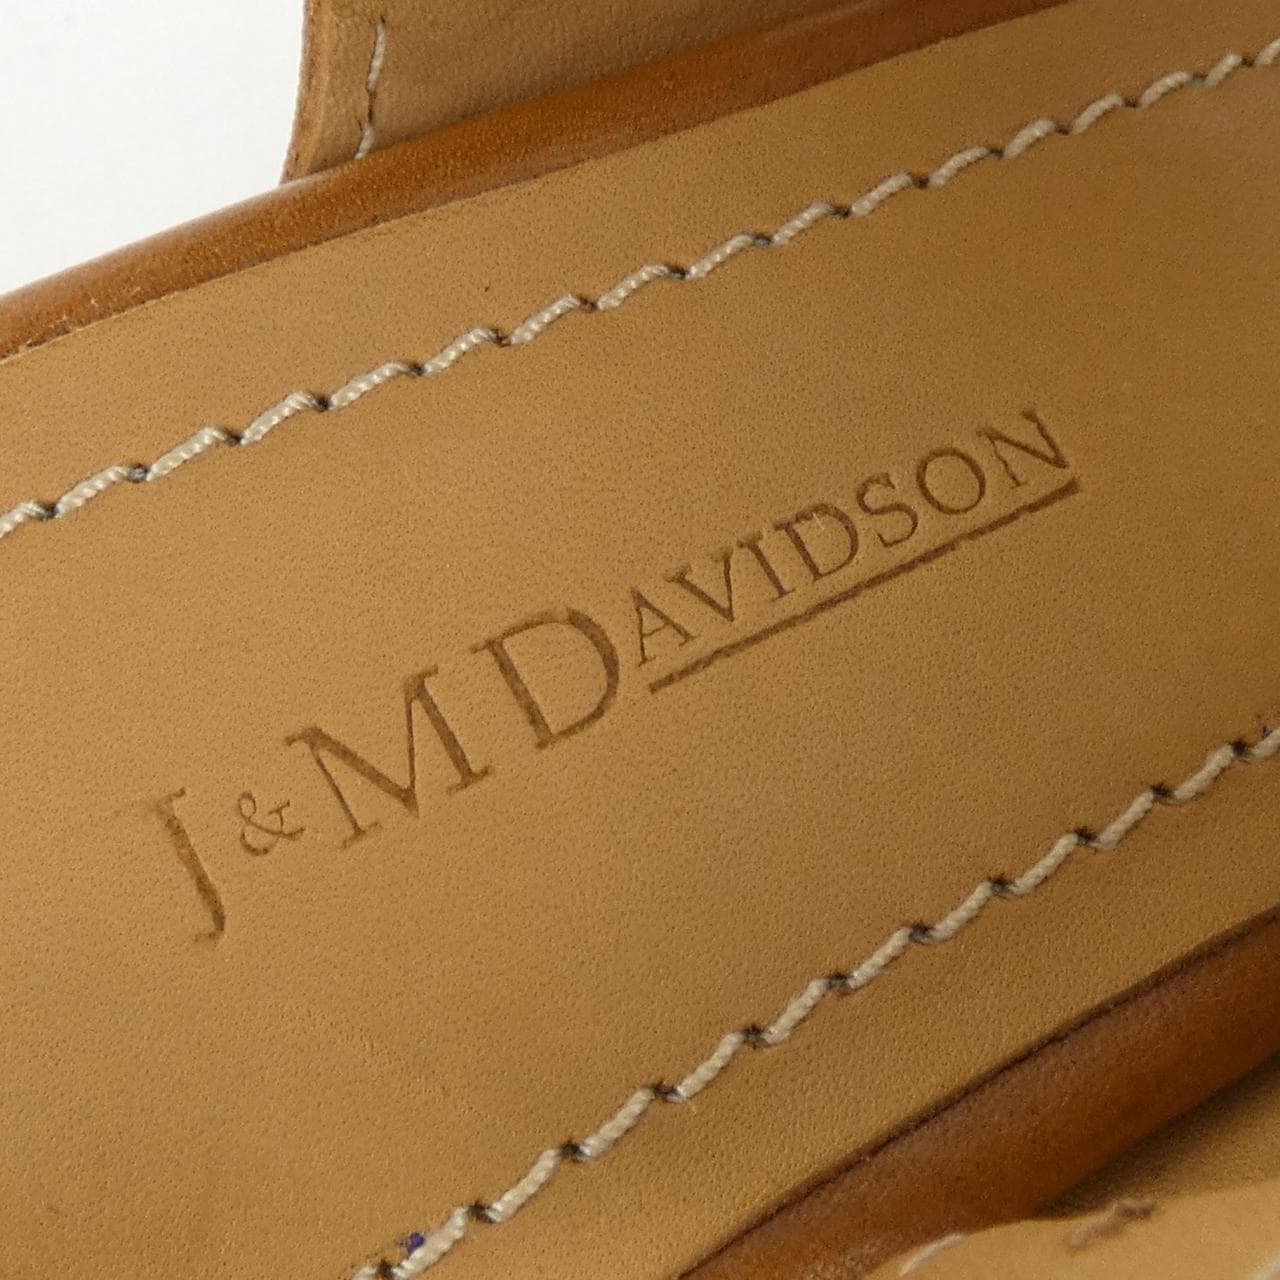 J&M DAVIDSON凉鞋